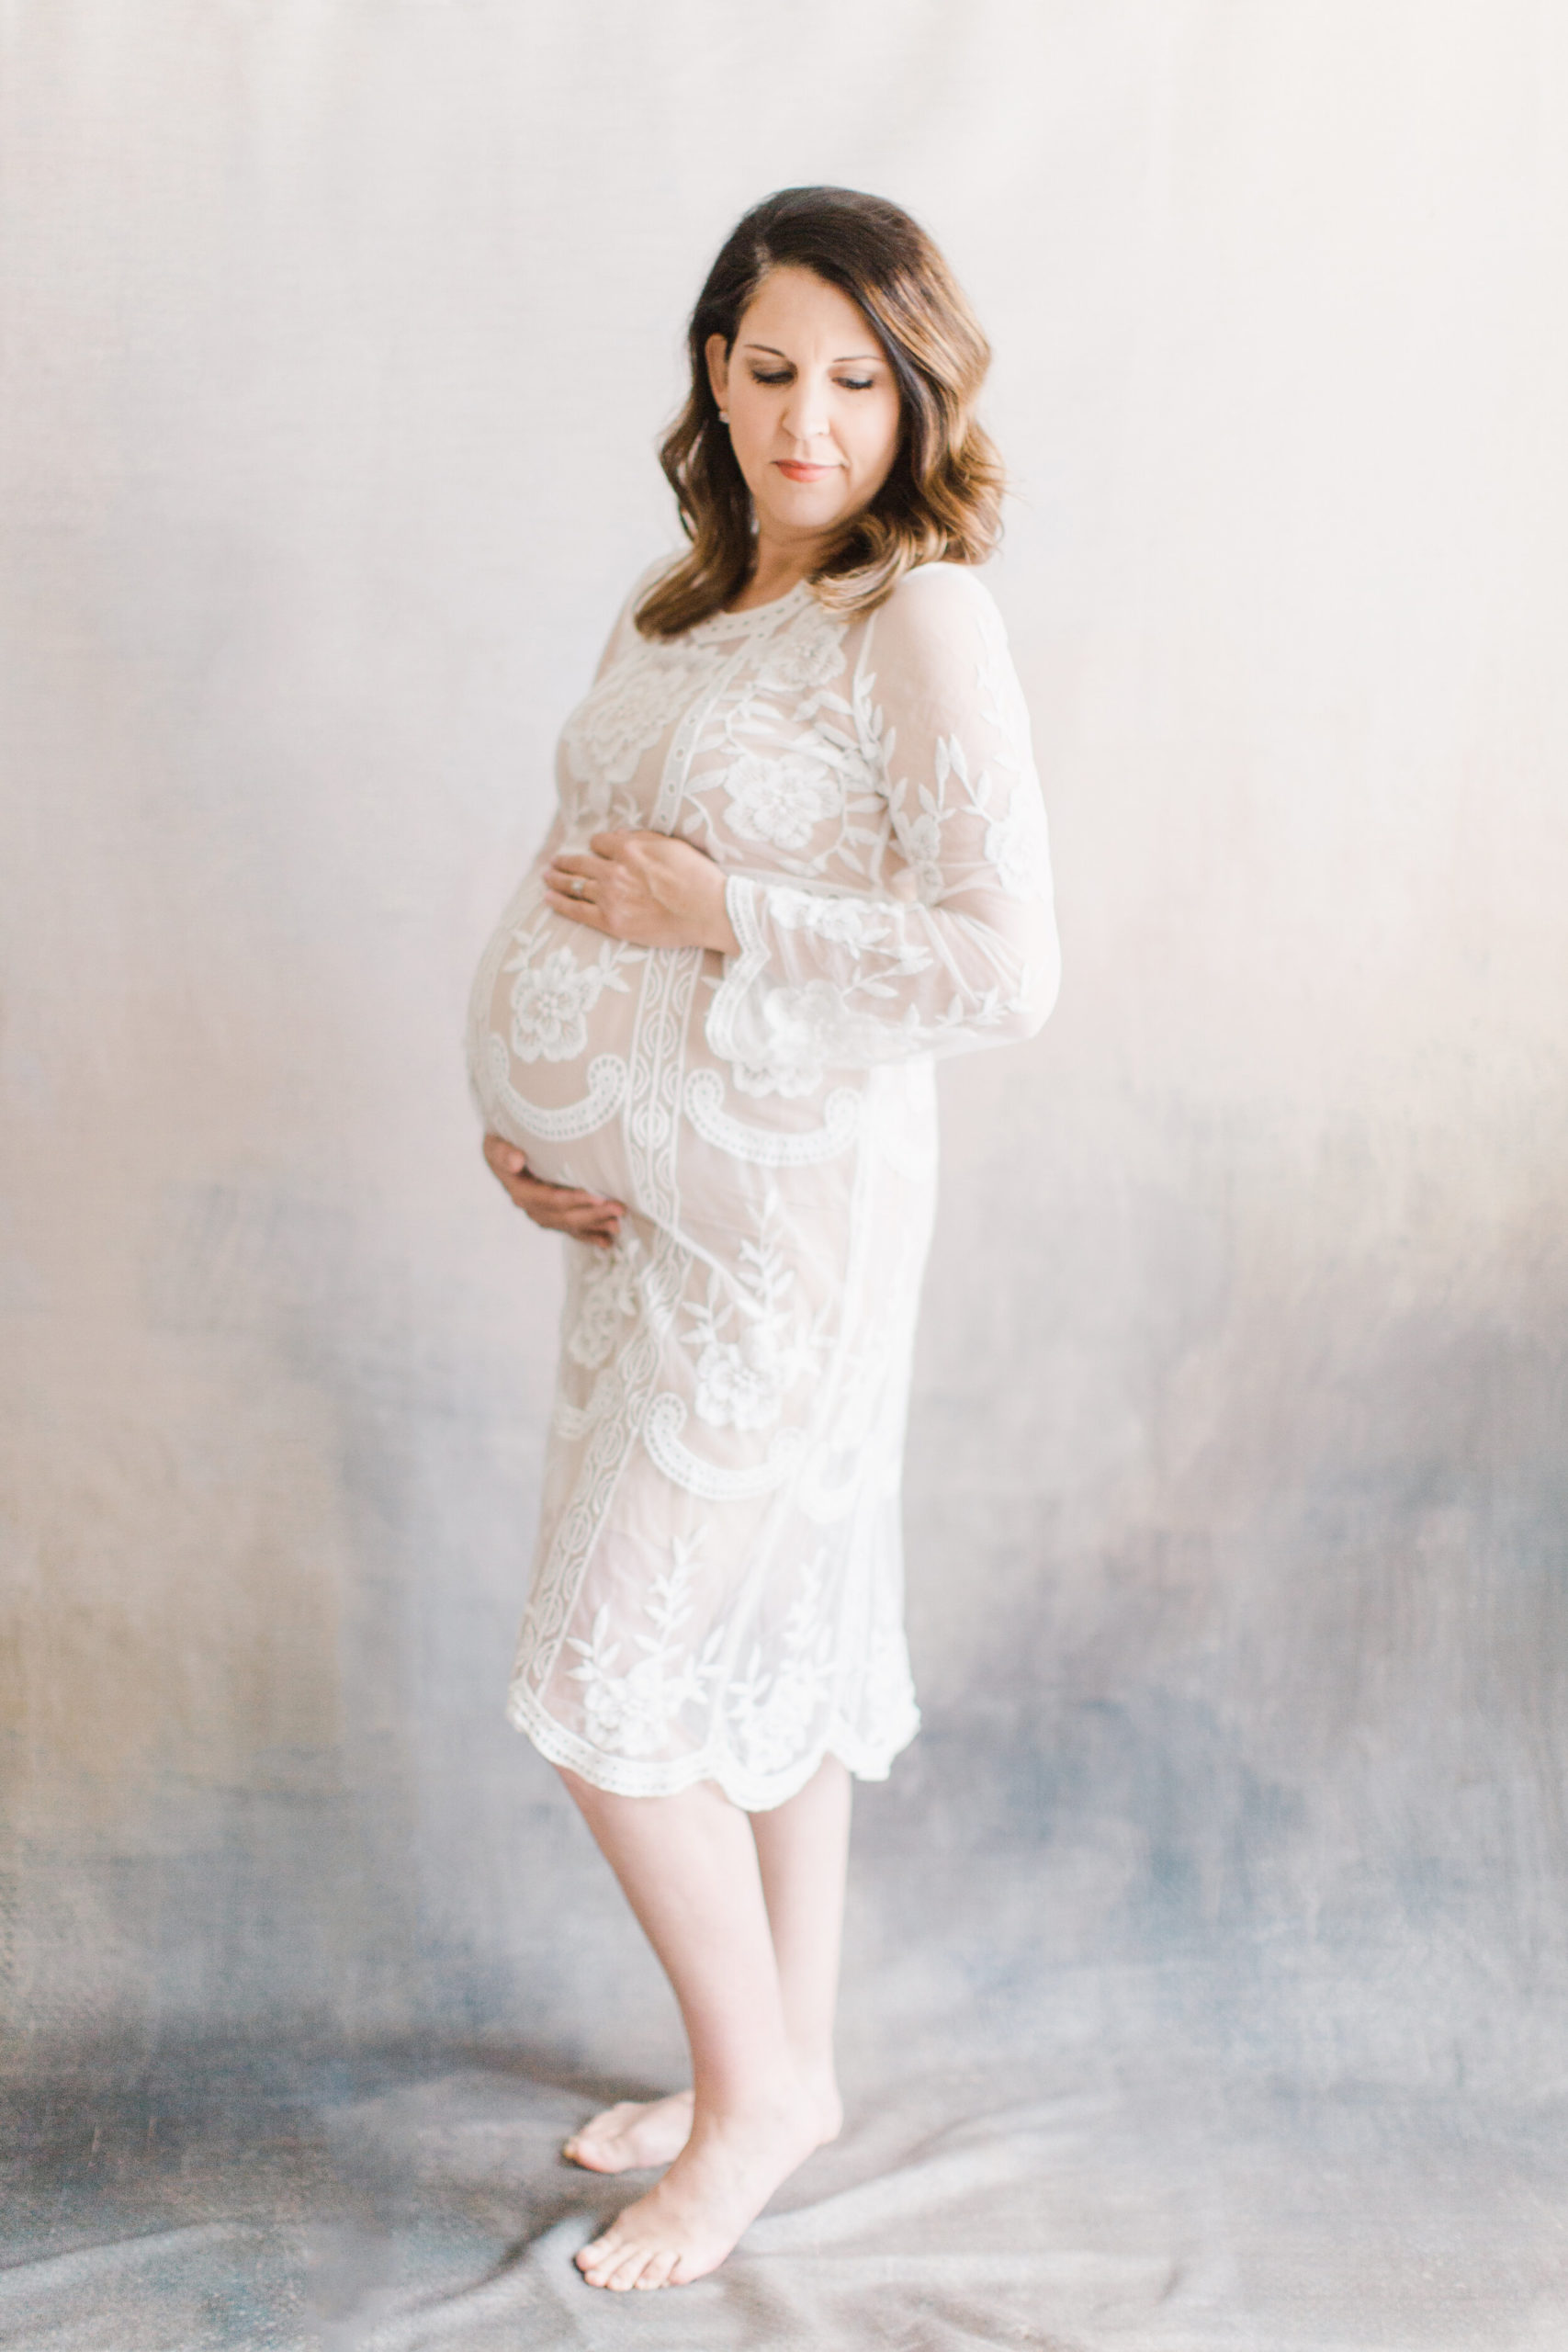 Northwest Arkansas Studio Maternity Photographer